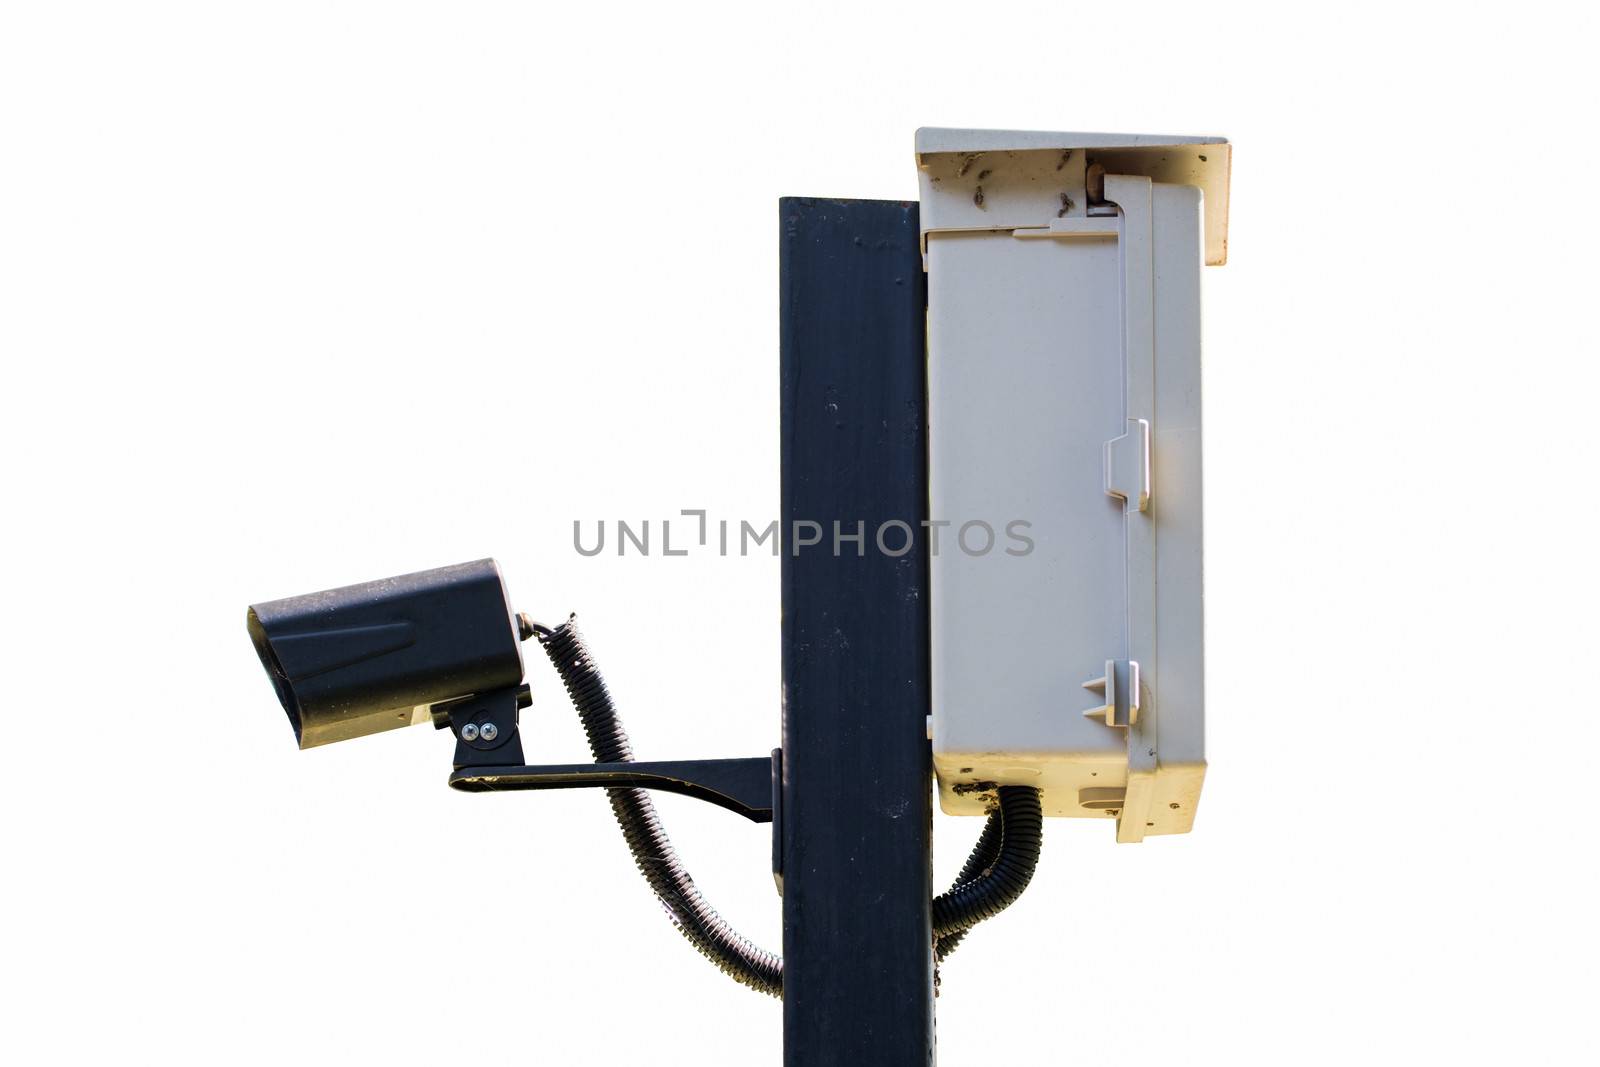 security CCTV camera isolate by Sorapop